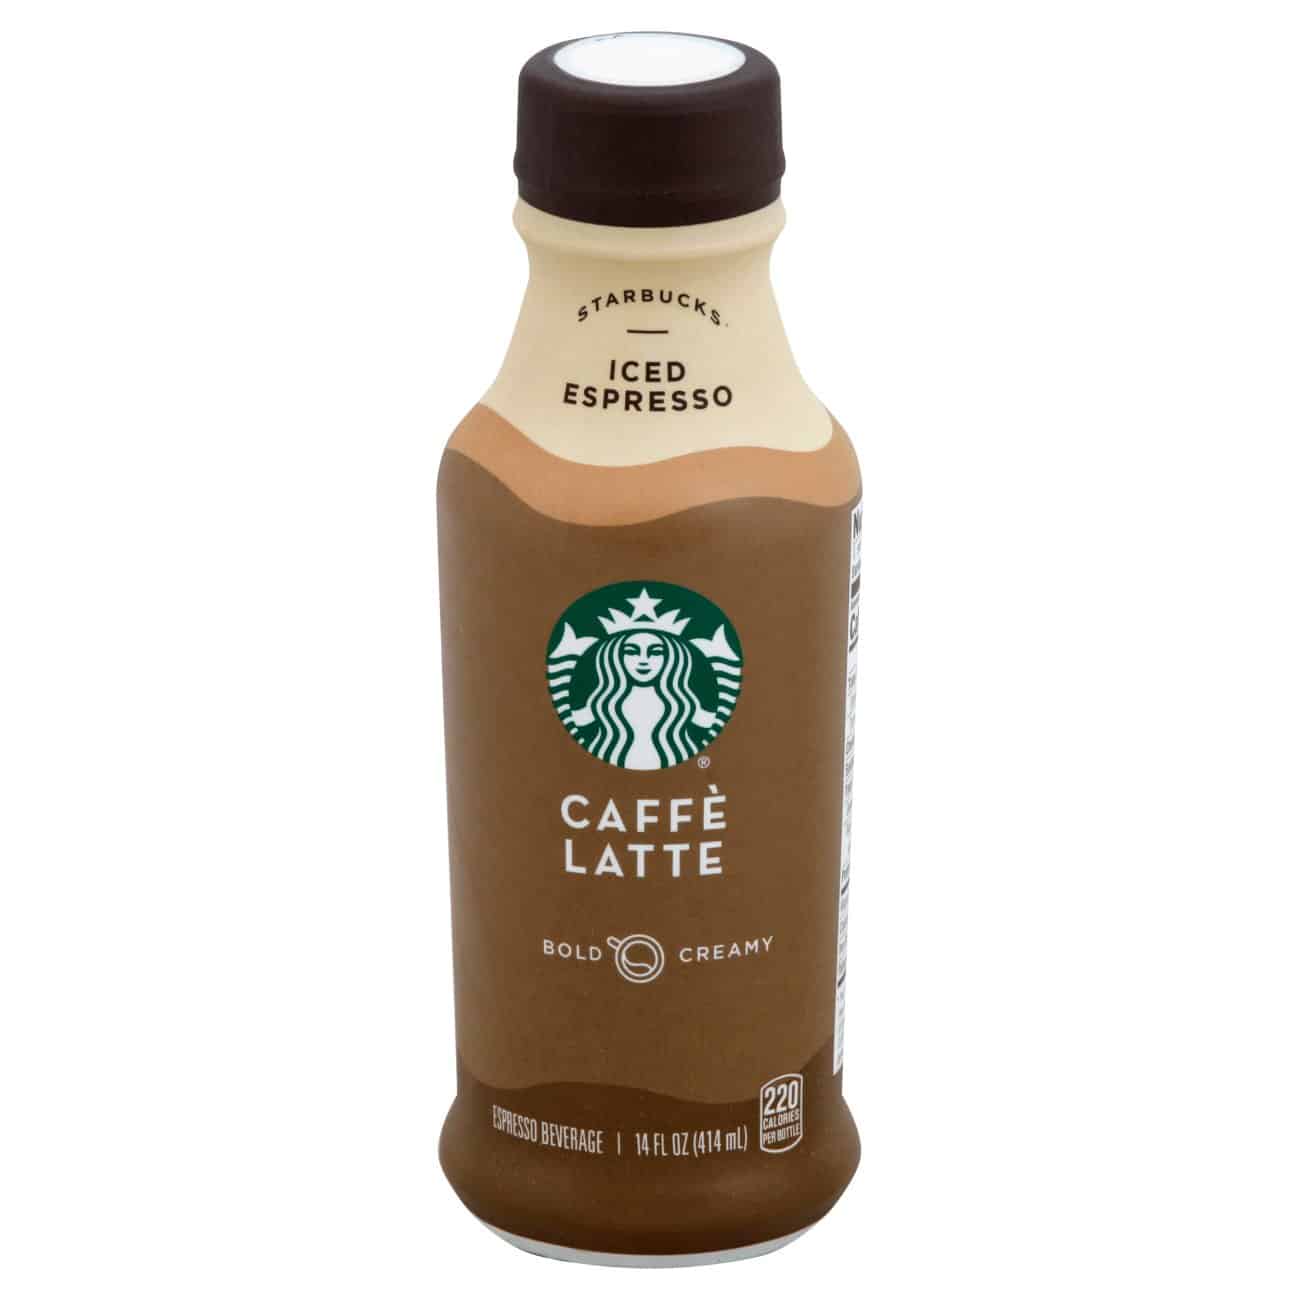 Starbucks Iced Espresso Caffe Latte